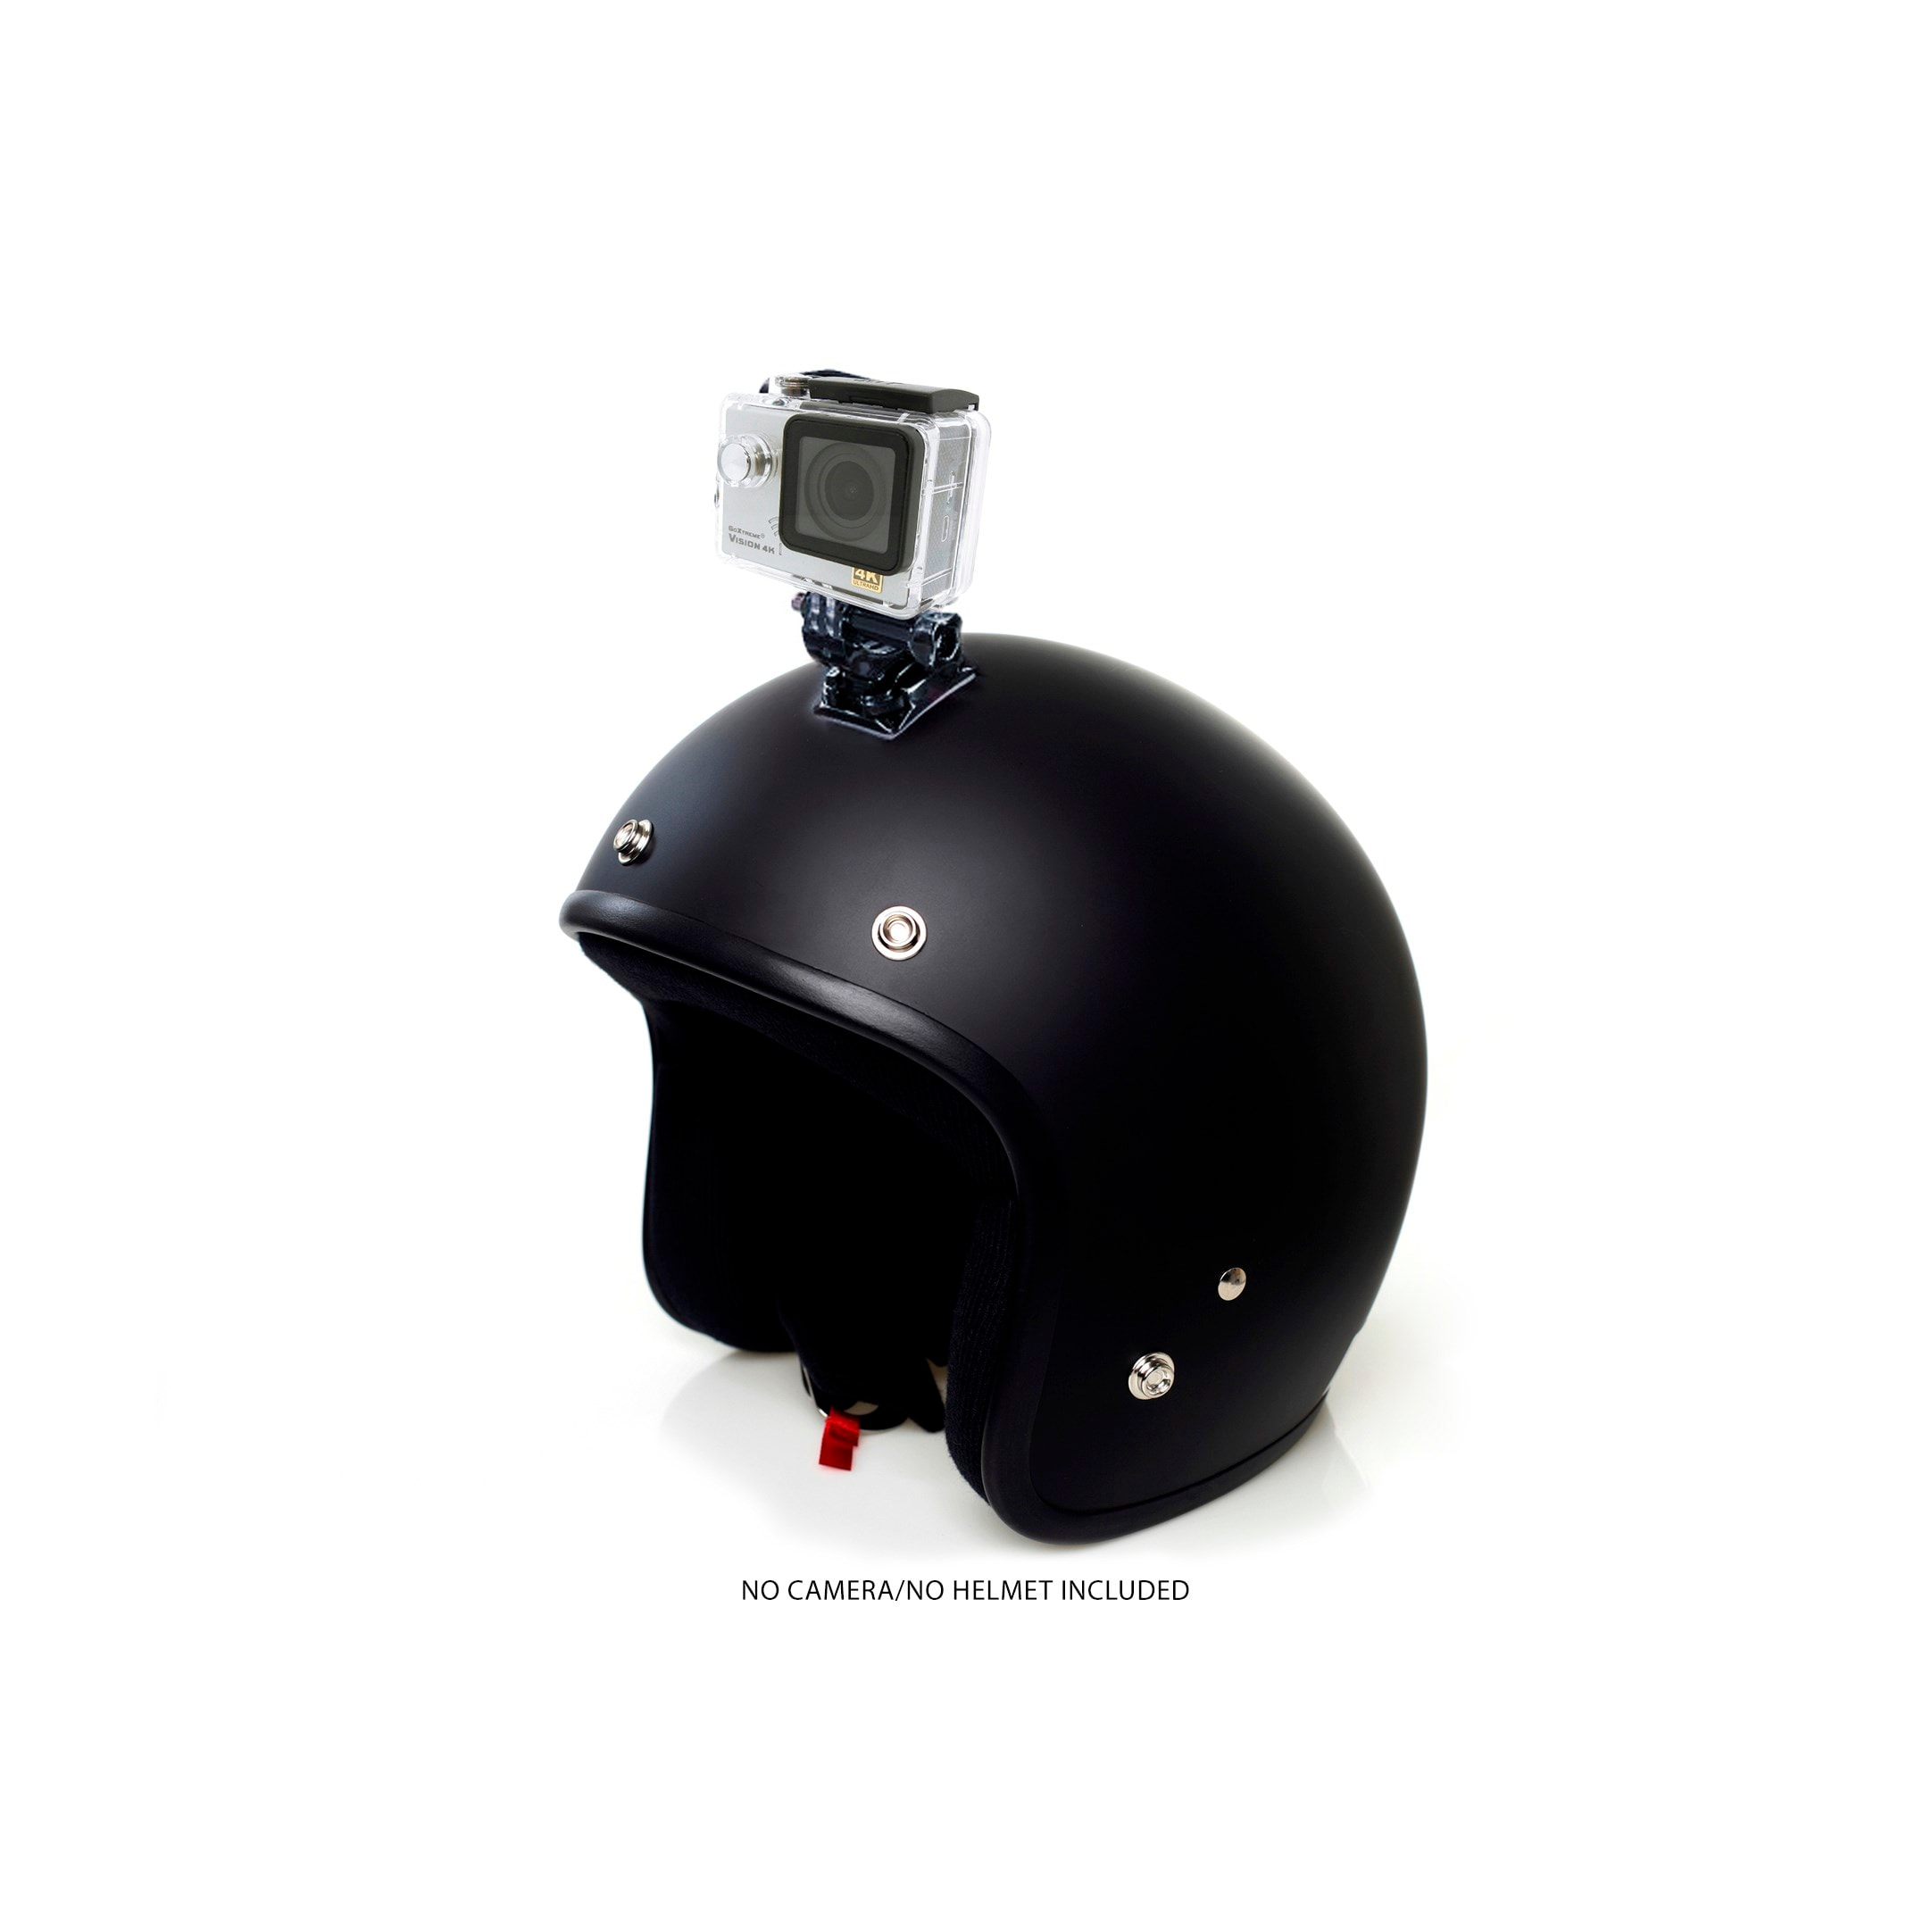 HURRISE Support de caméra pour casque Casque de moto caméra de